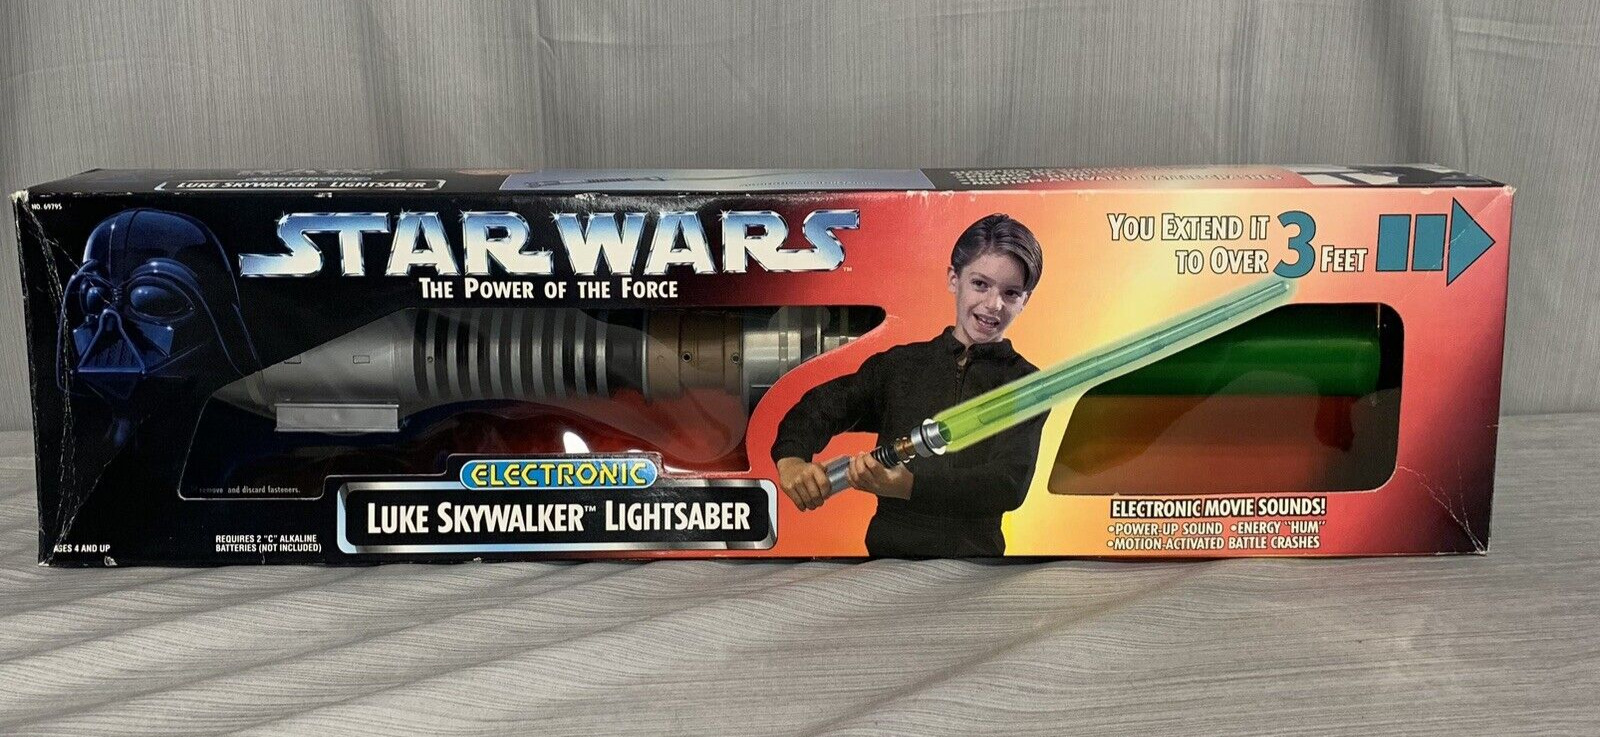 1995 Kenner Star Wars Electronic Luke Skywalker Lightsaber Power Of Force